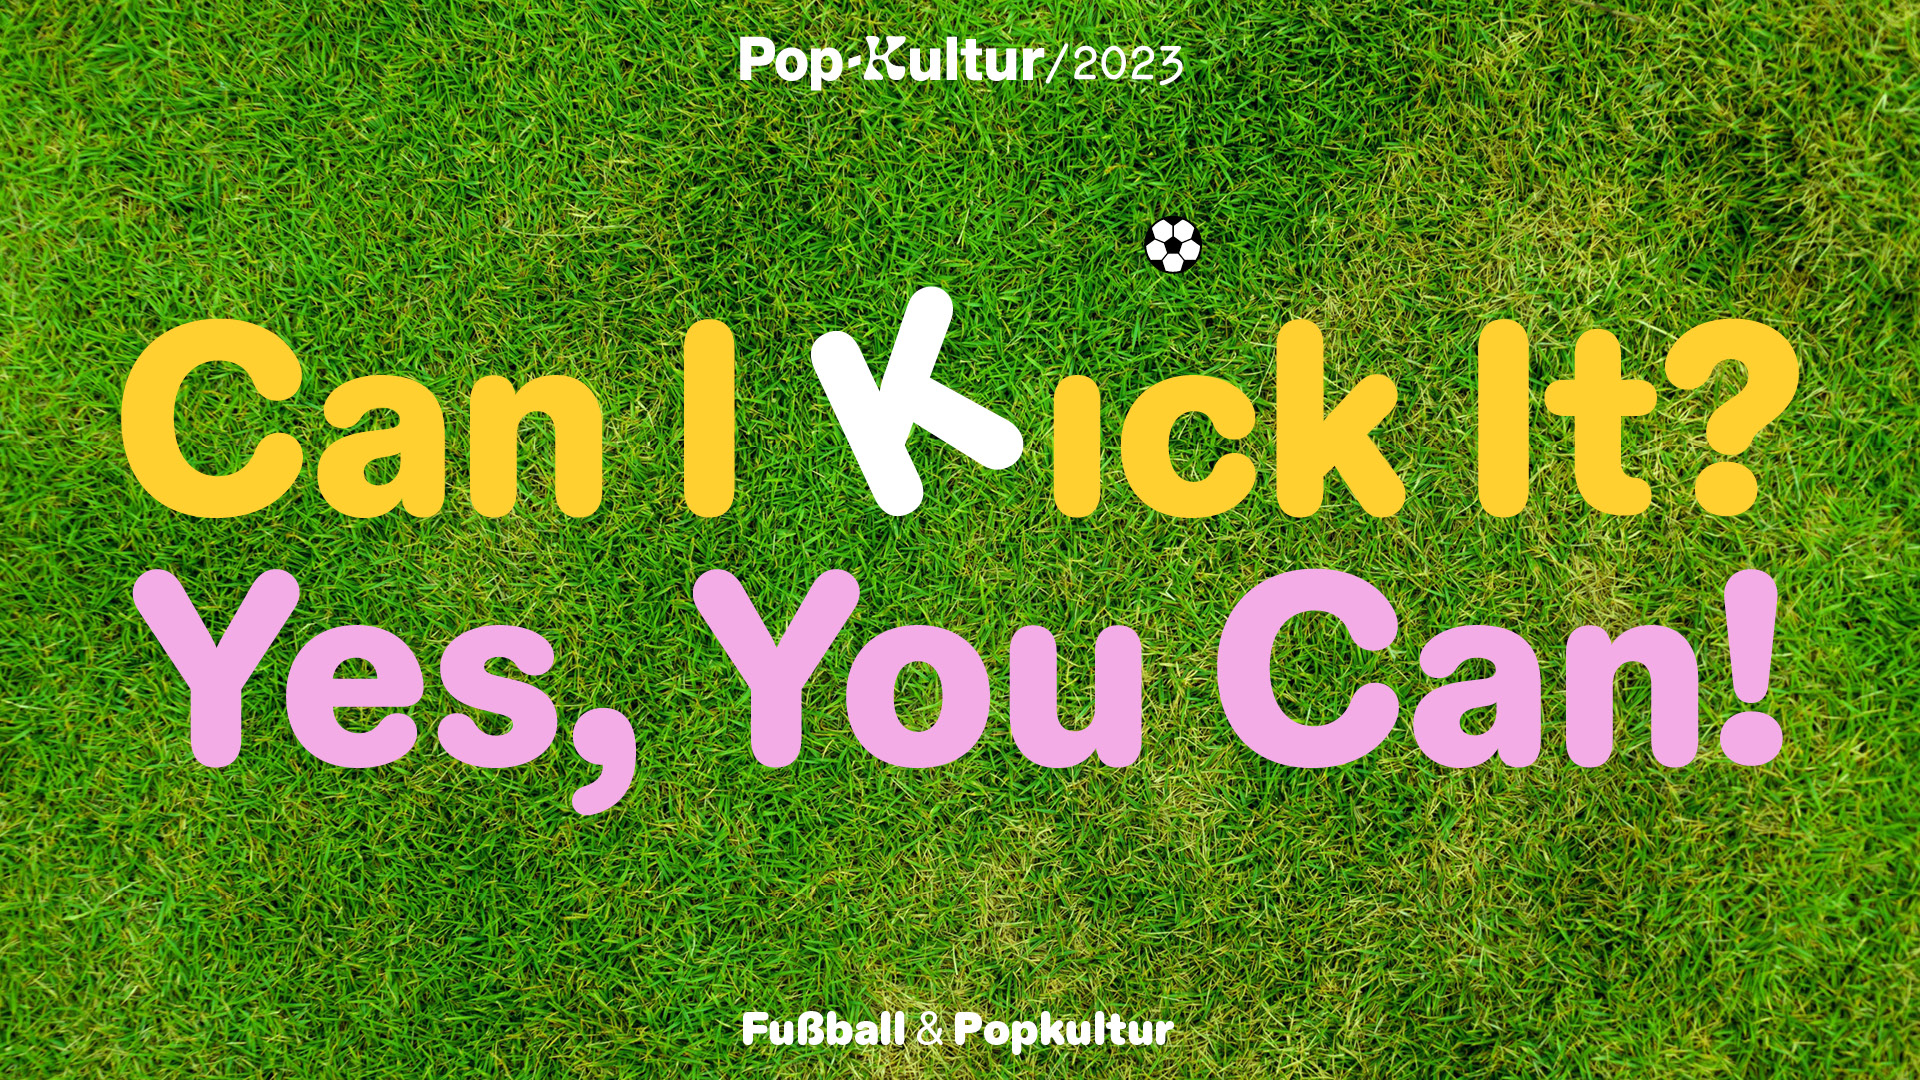 Das Pop-Kultur festival 2023 mit Fußball-Fokus